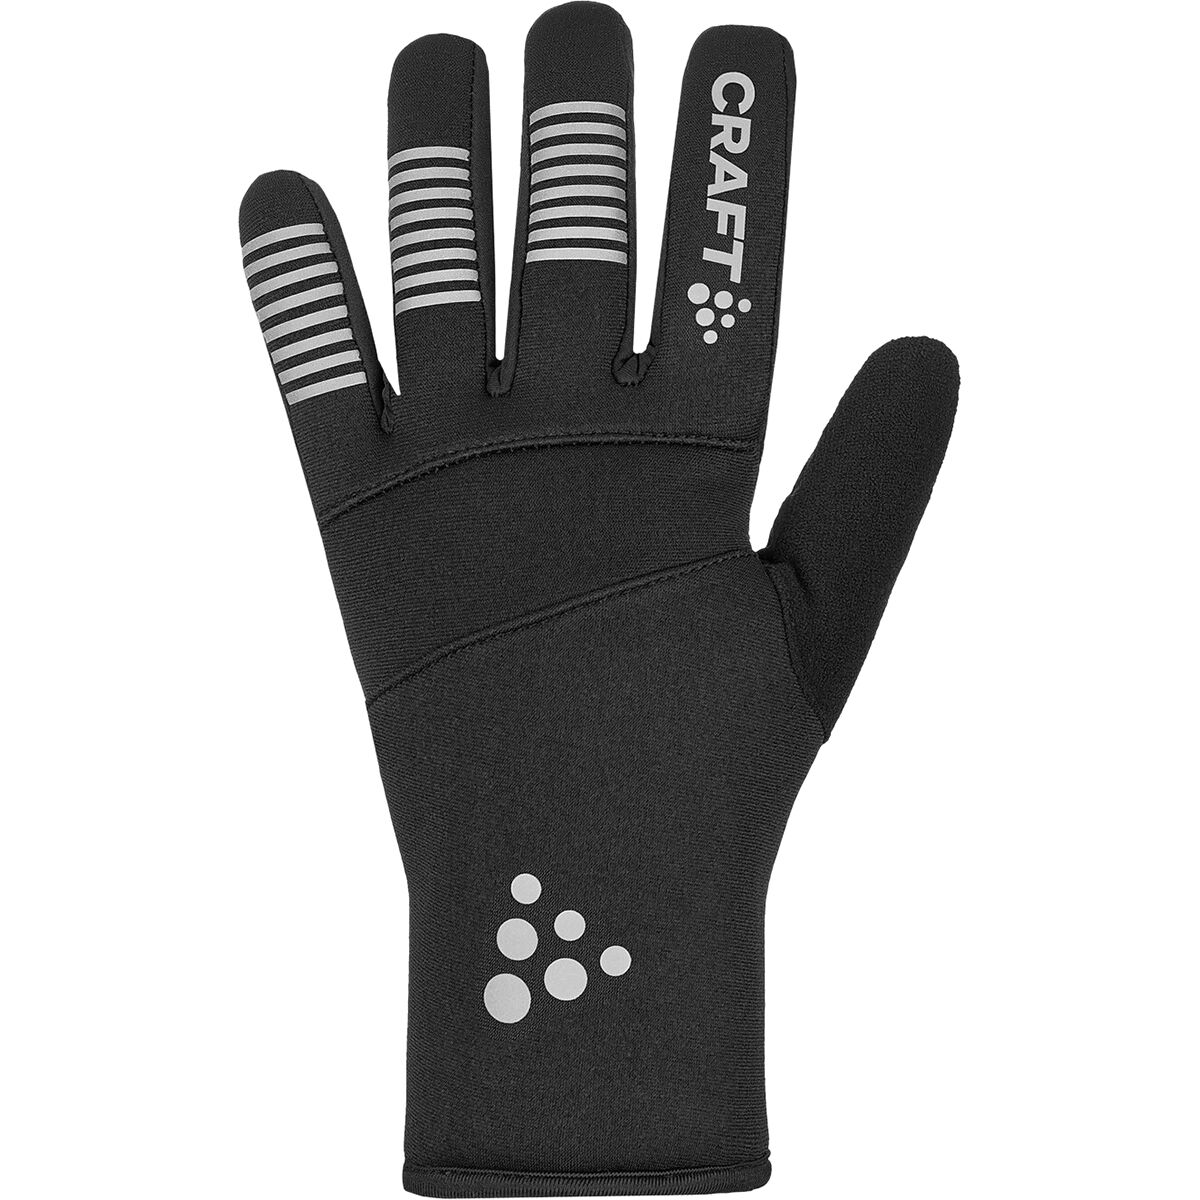 Craft Adv Subz Light Glove - Men's Black, S